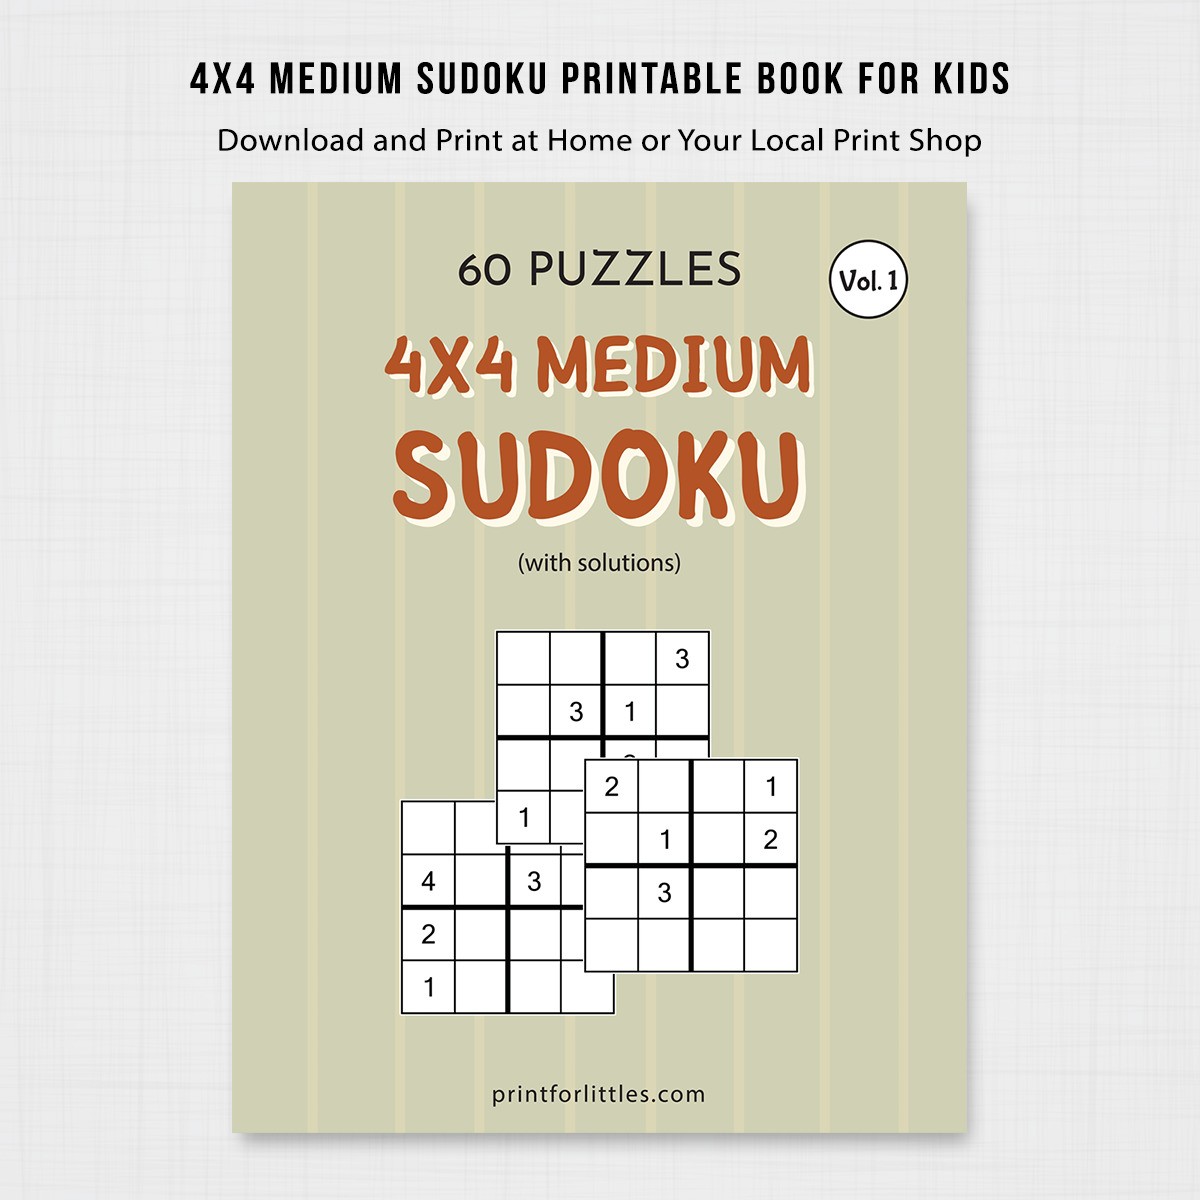 4×4 Medium Sudoku for Kids